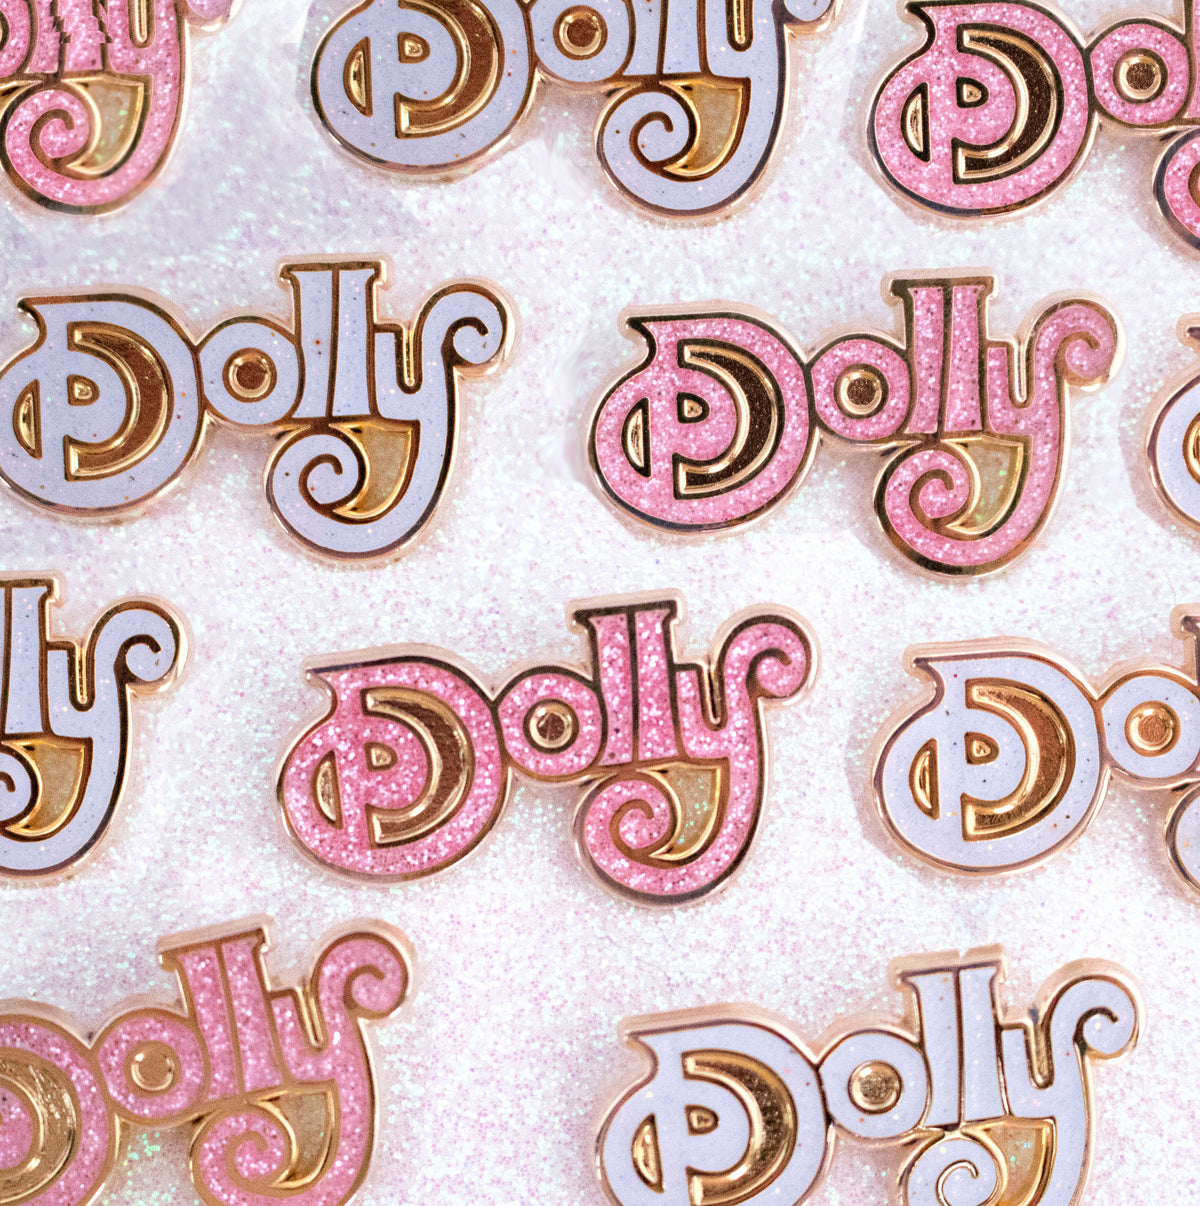 Dolly Parton White Pin - Abbey Eilermann